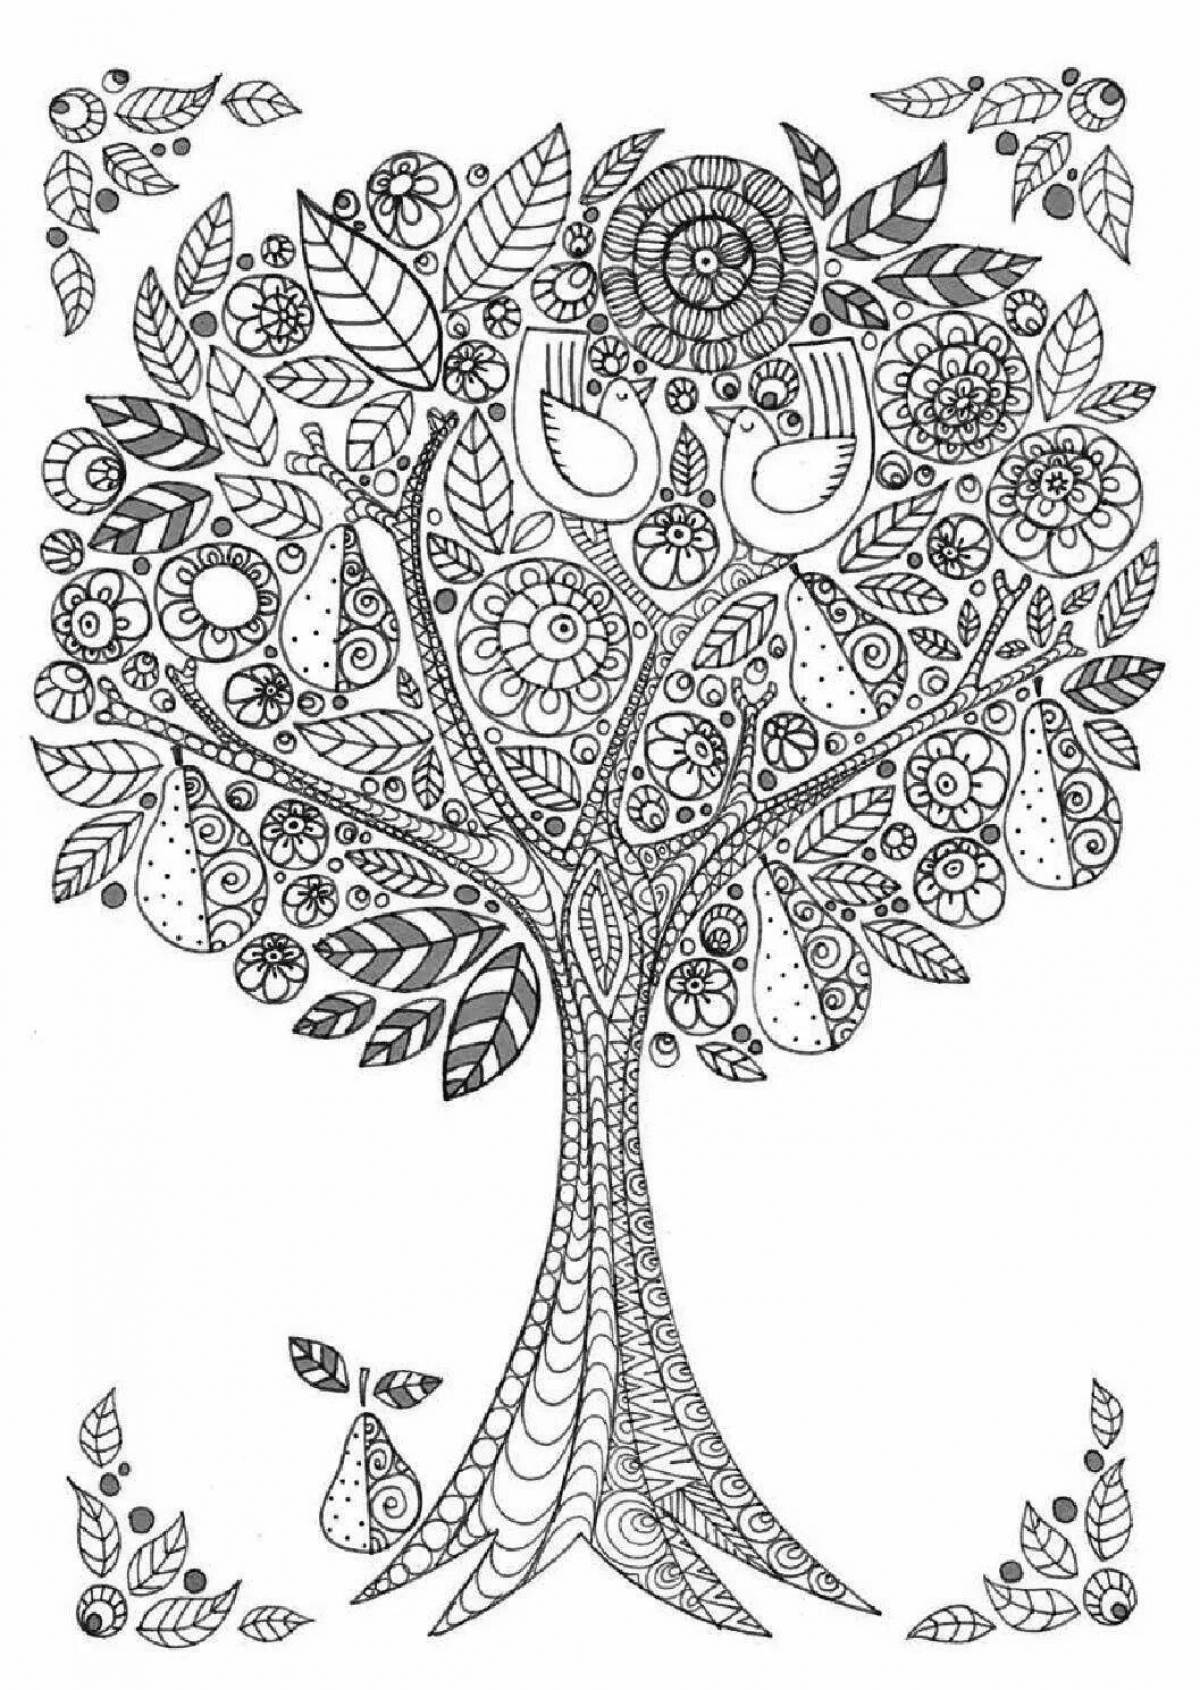 Great magic tree coloring book